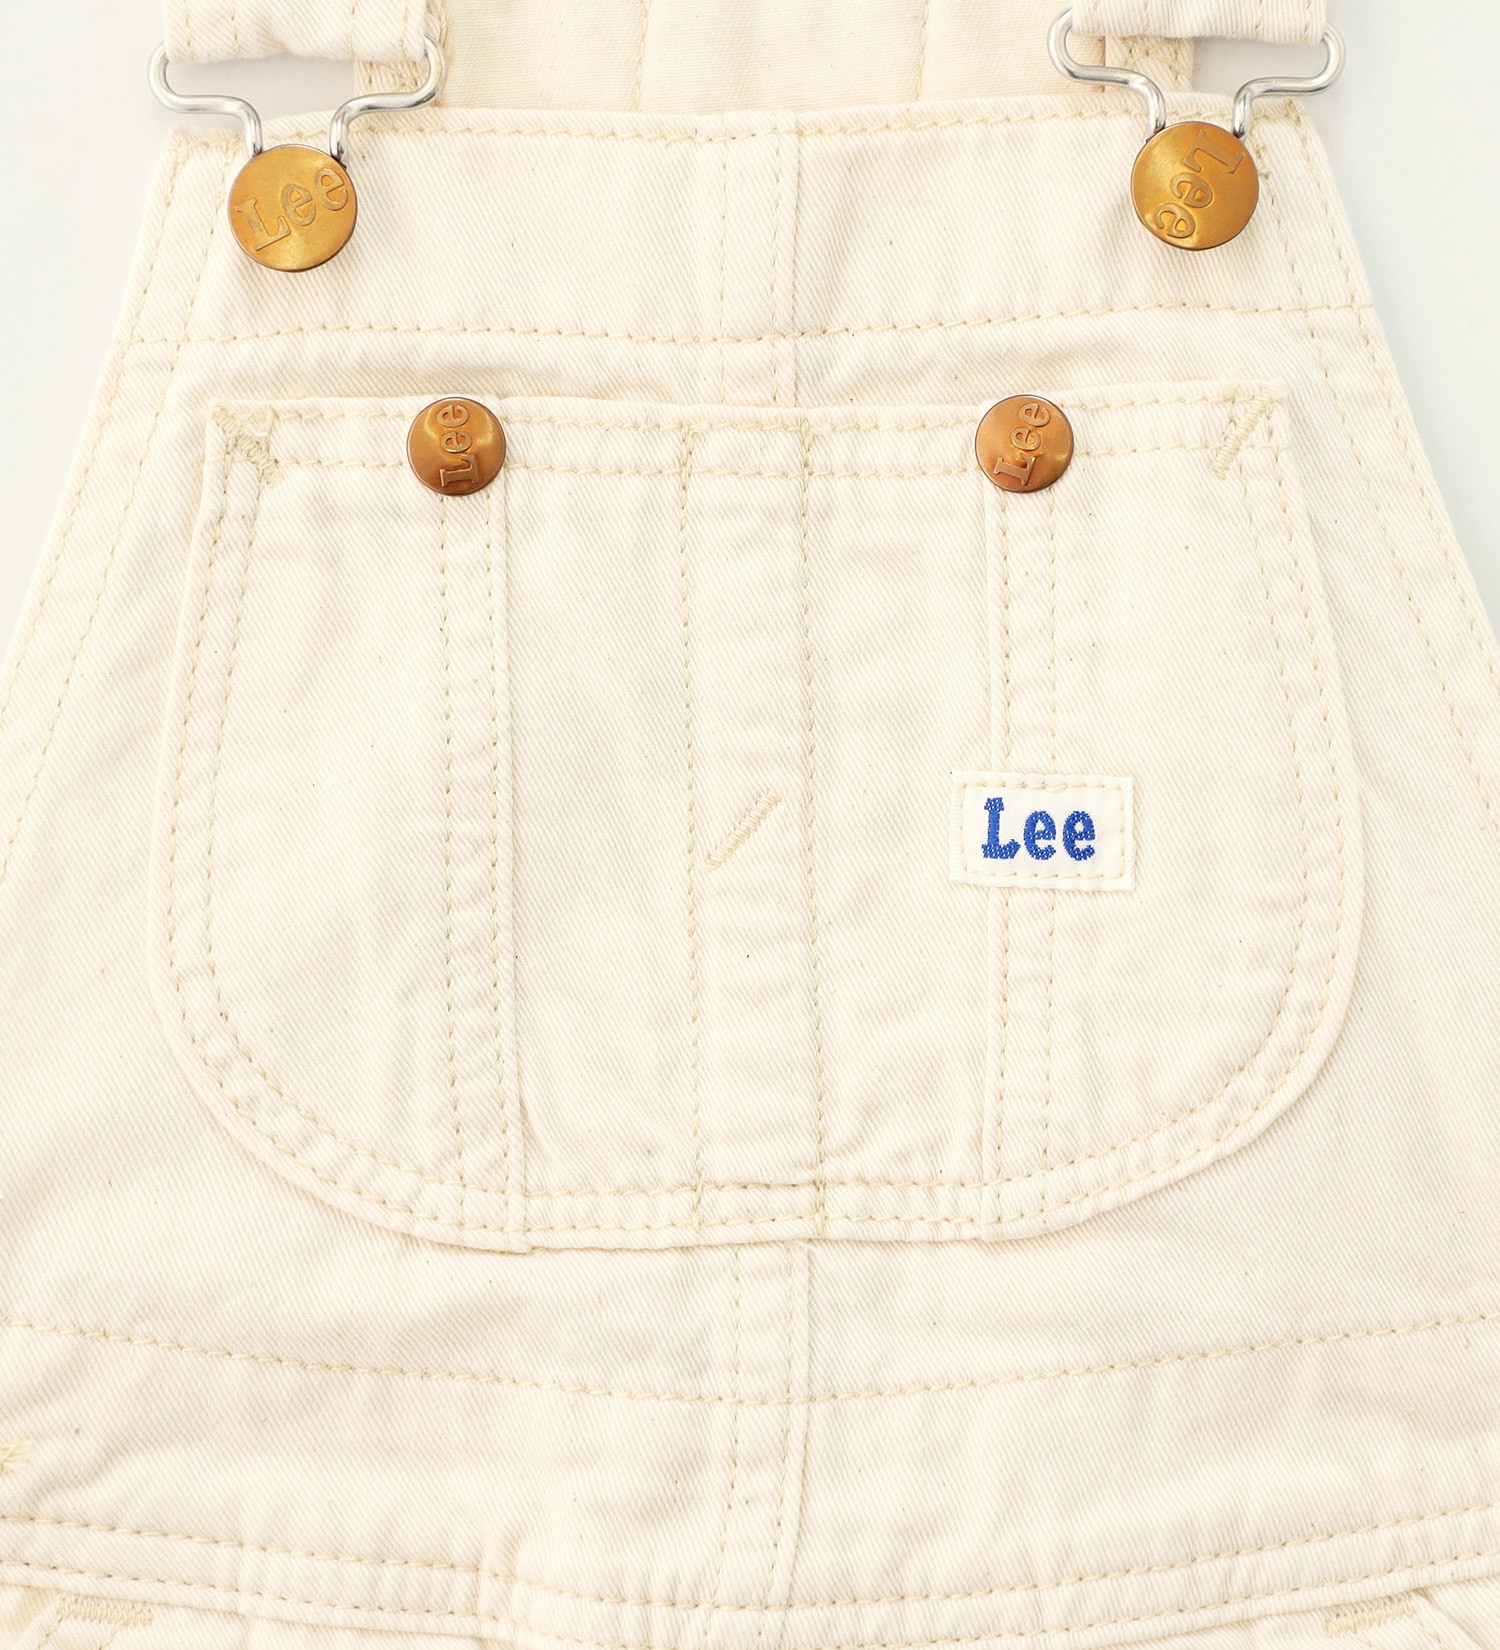 Lee(リー)の【80-100cm】ベビー ジャンパースカート|オールインワン/ジャンパースカート/キッズ|アイボリー